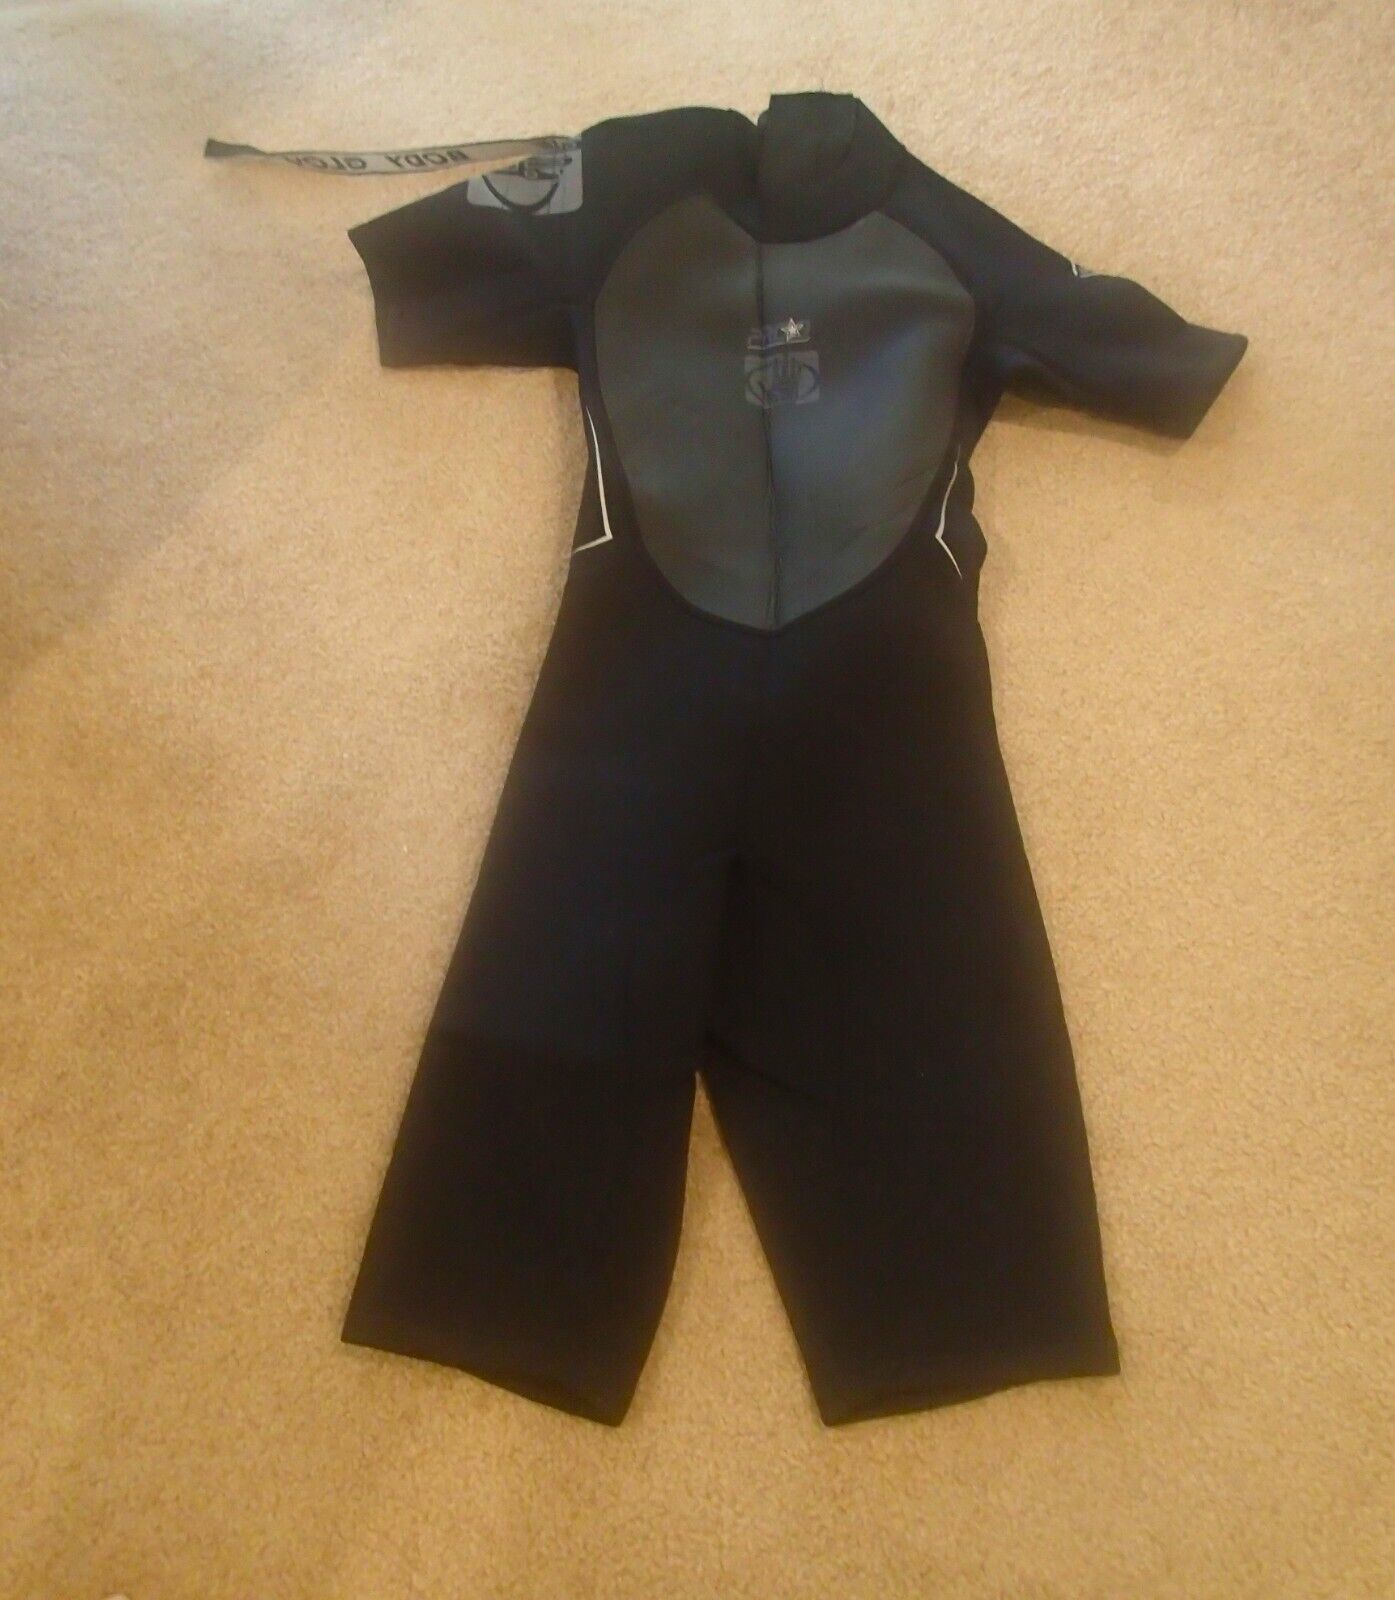 Body Glove Pro 3 Black Short Sleeve Spring Wetsuit Youth Size 14